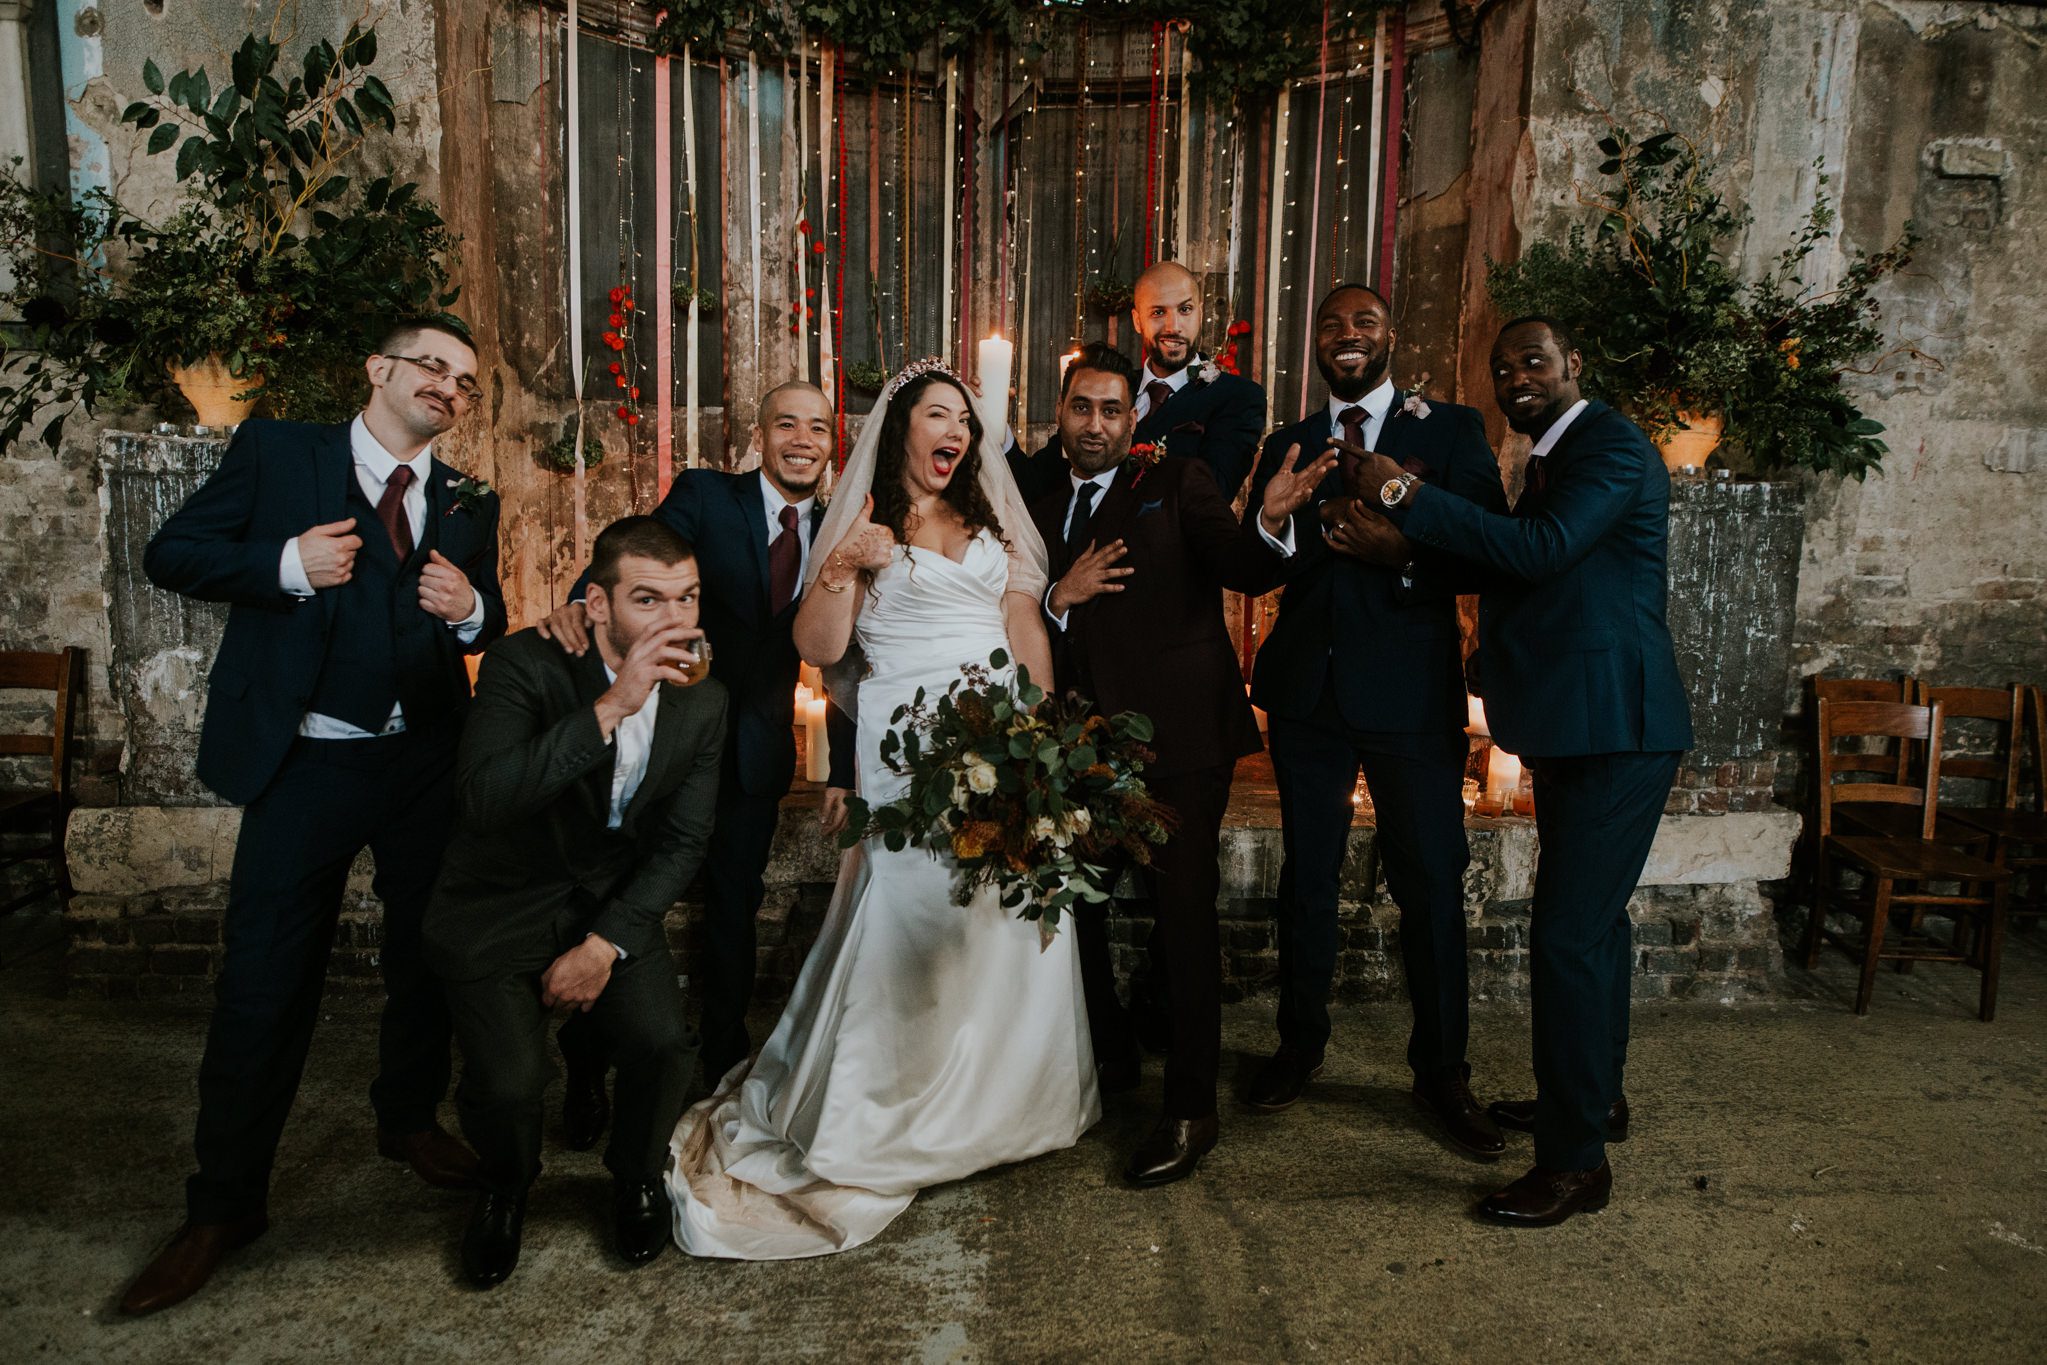 A wedding group shot at the Asylum Chapel, London